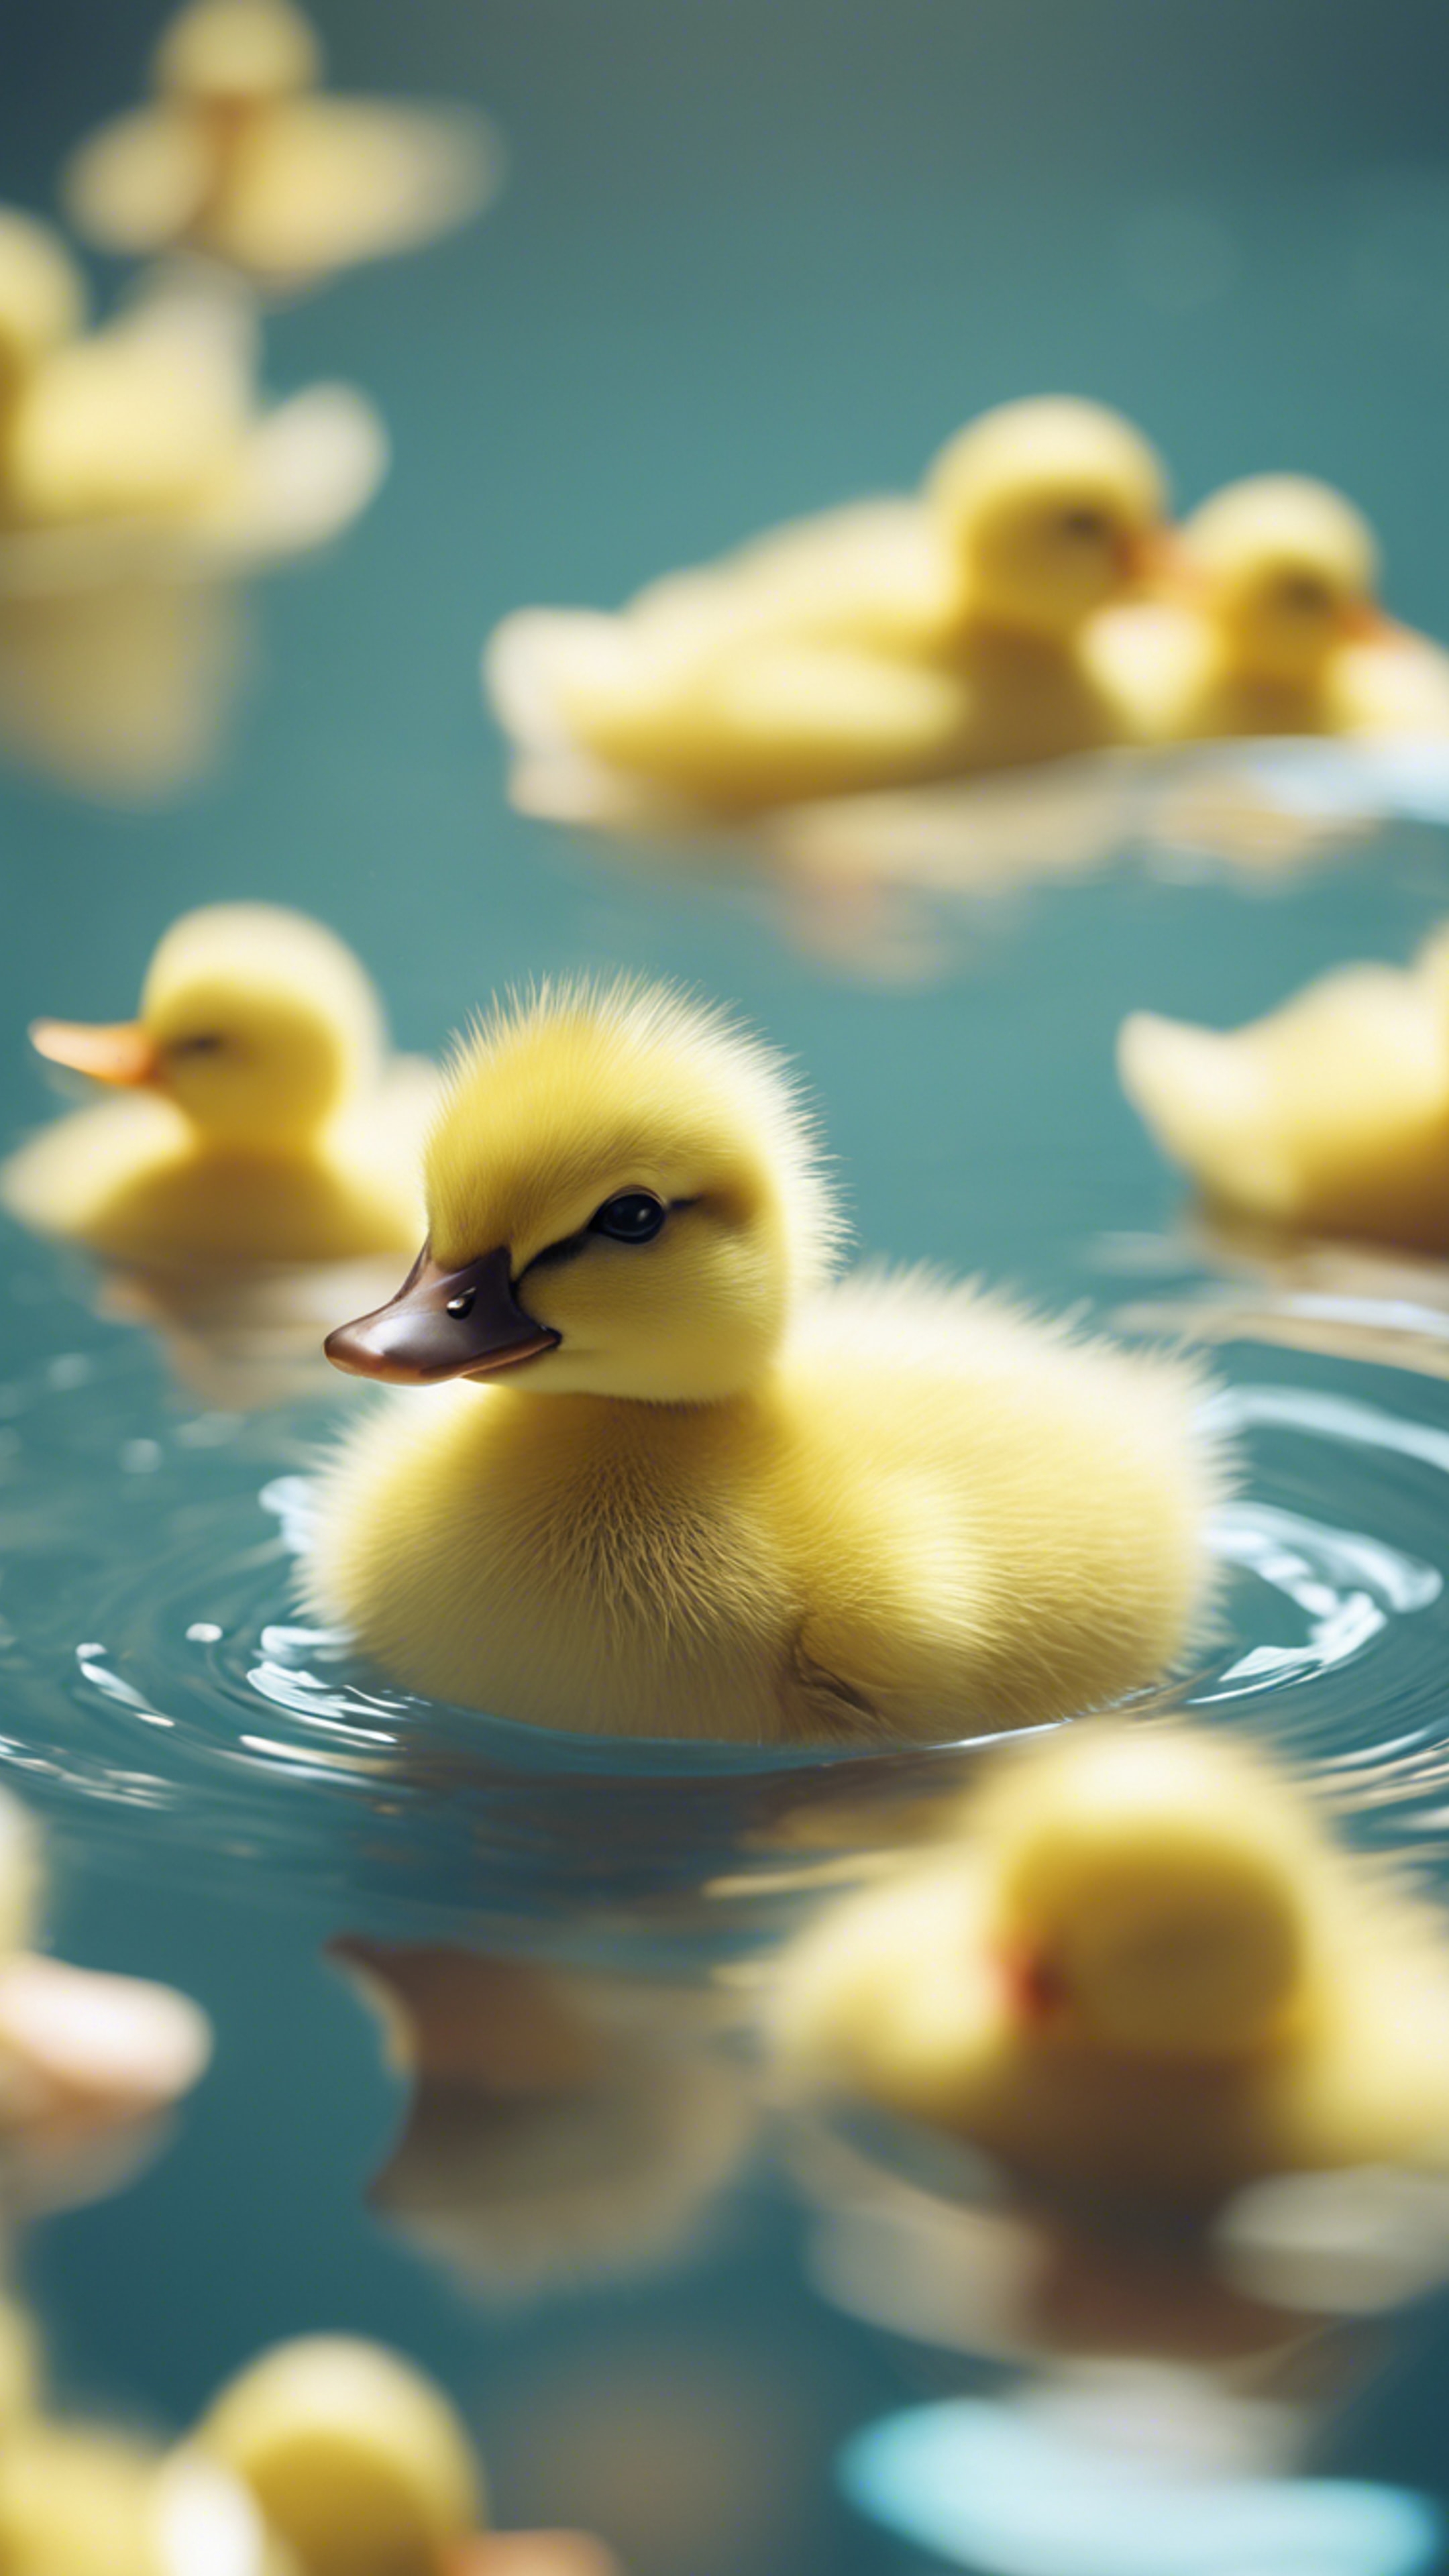 A small, chubby, kawaii yellow duckling swimming in a pastel blue pond. טפט[2b07b187d2cc4e759cc9]